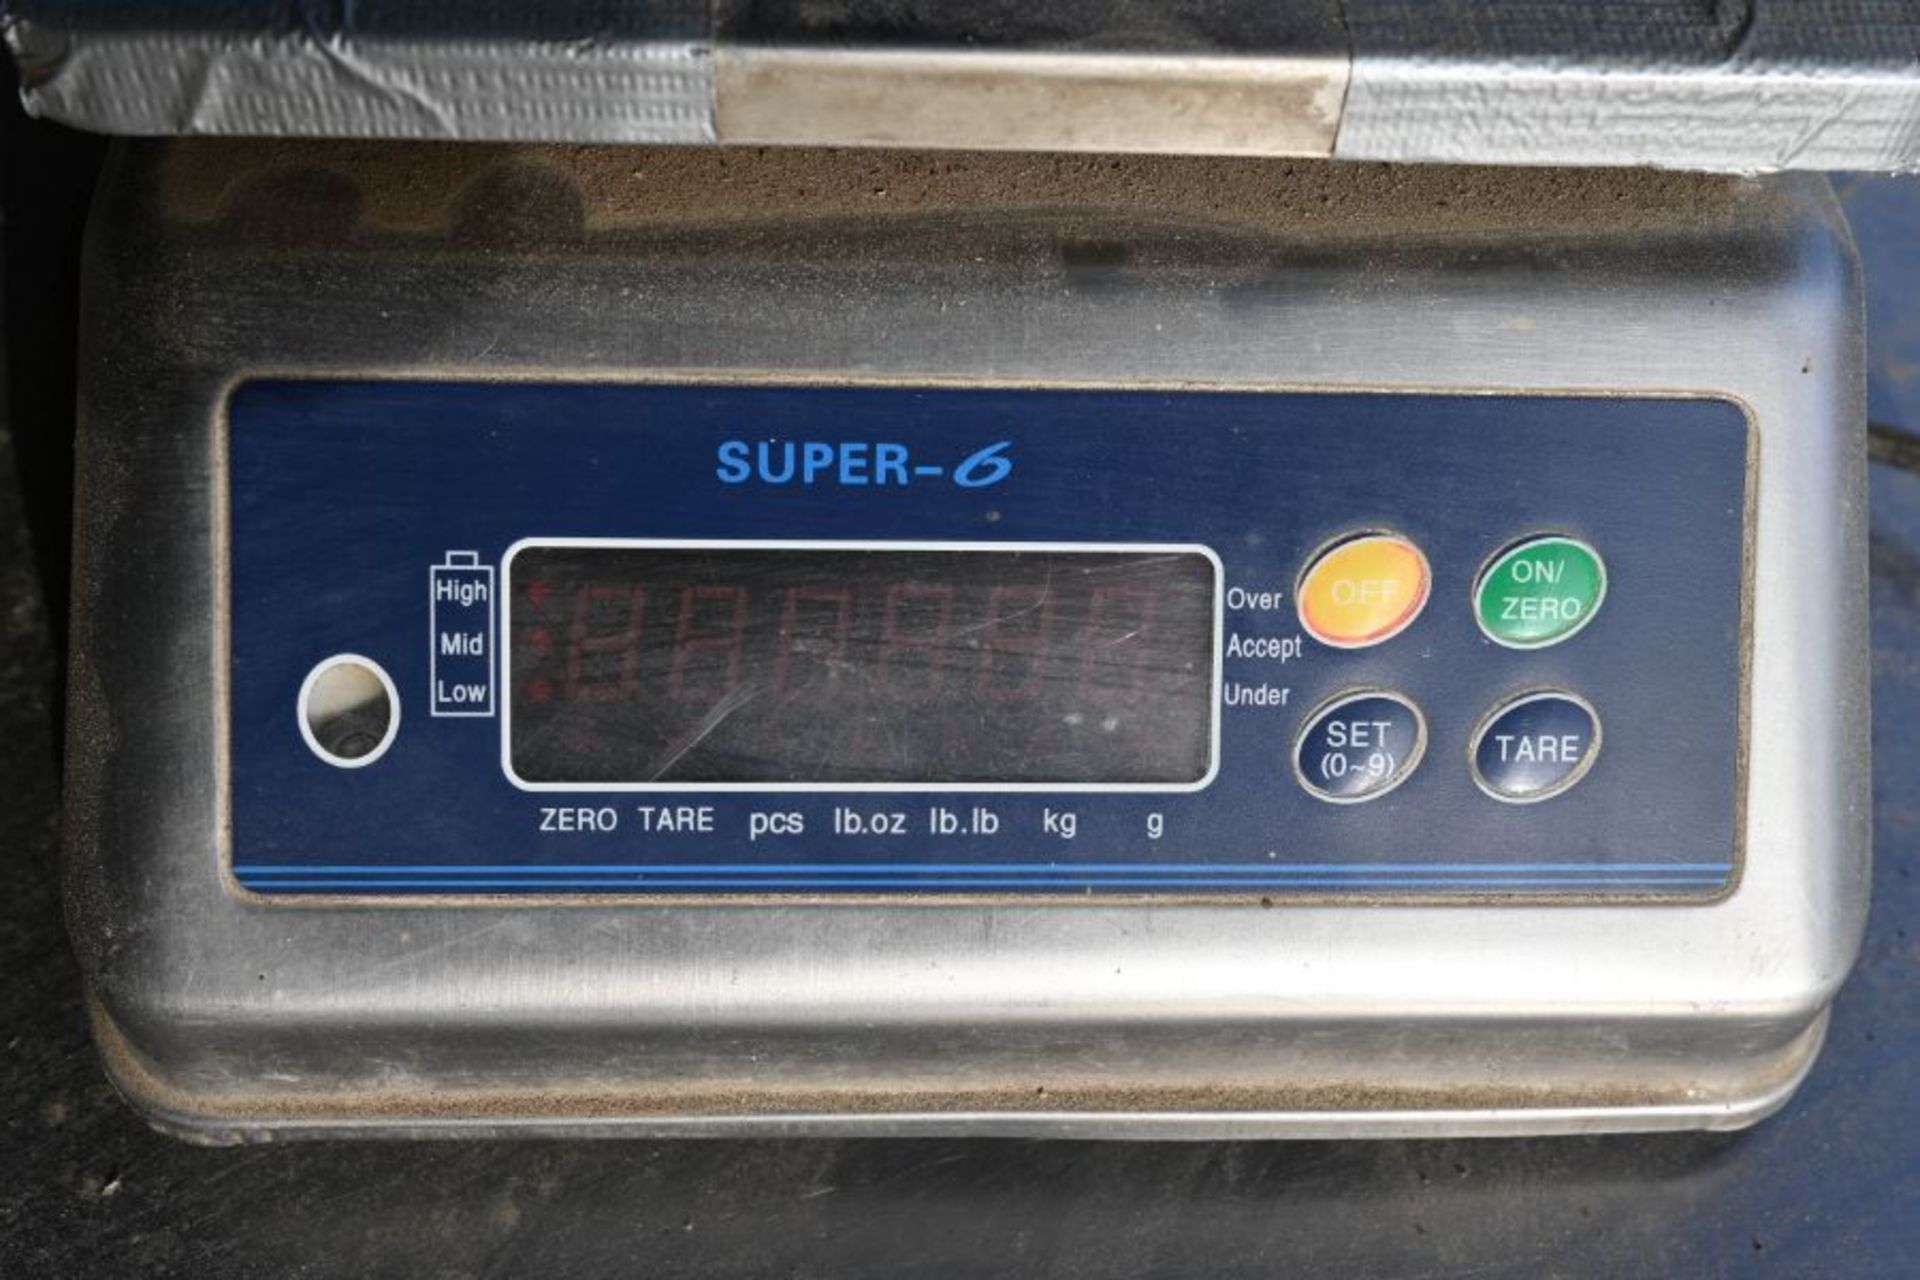 Super 6 Yantai Junjie weighing apparatus - Image 2 of 4